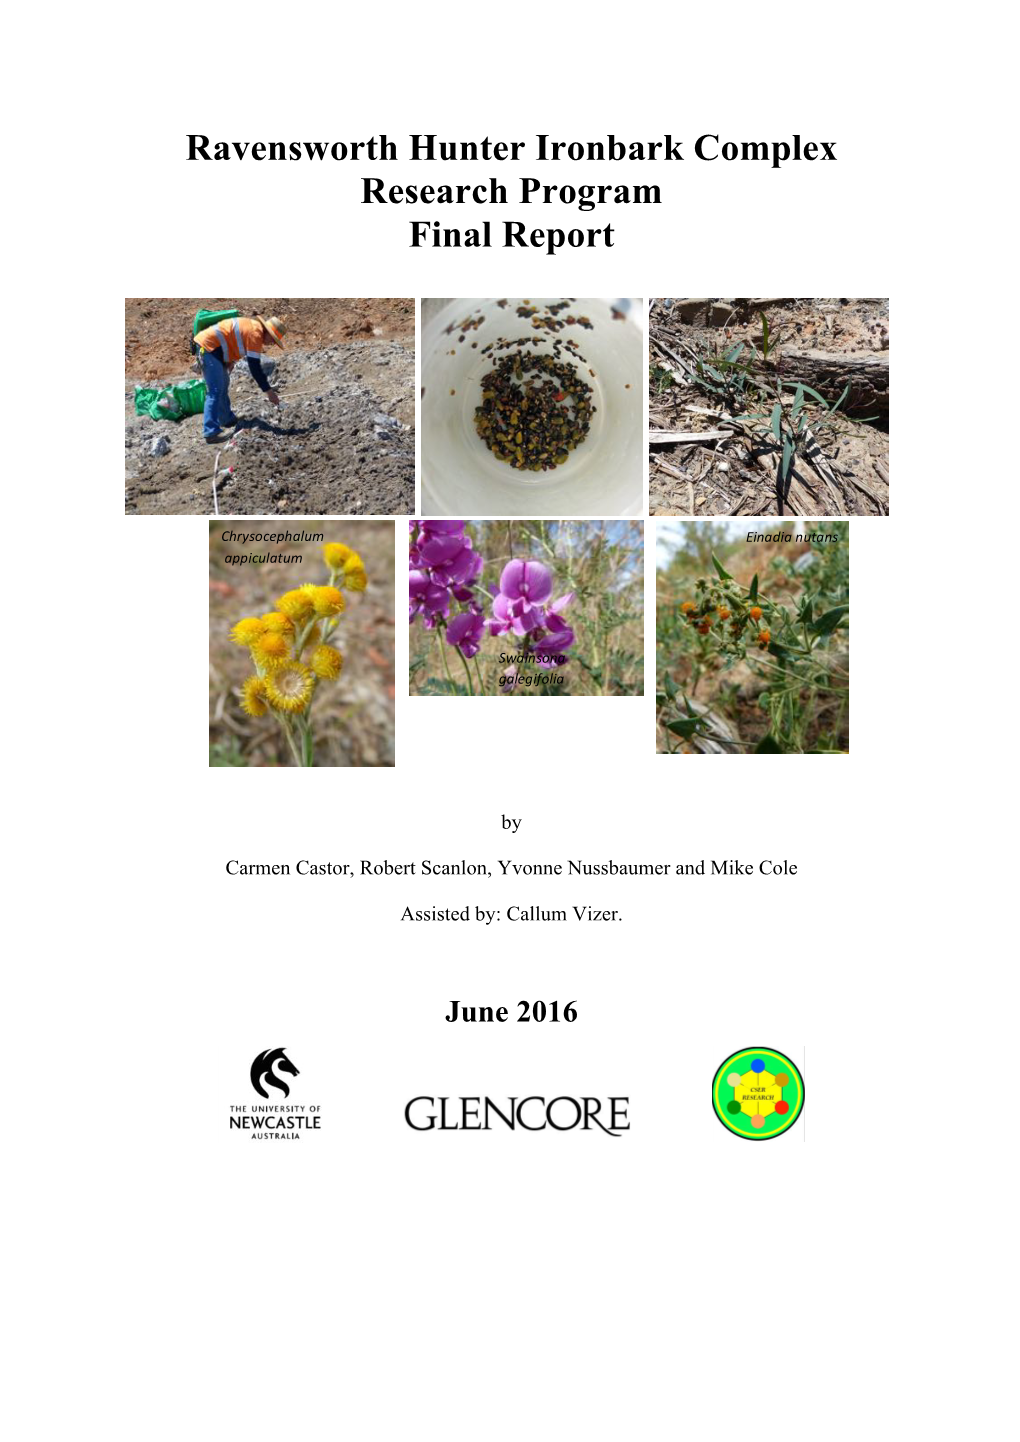 Ravensworth Hunter Ironbark Complex Research Program Final Report